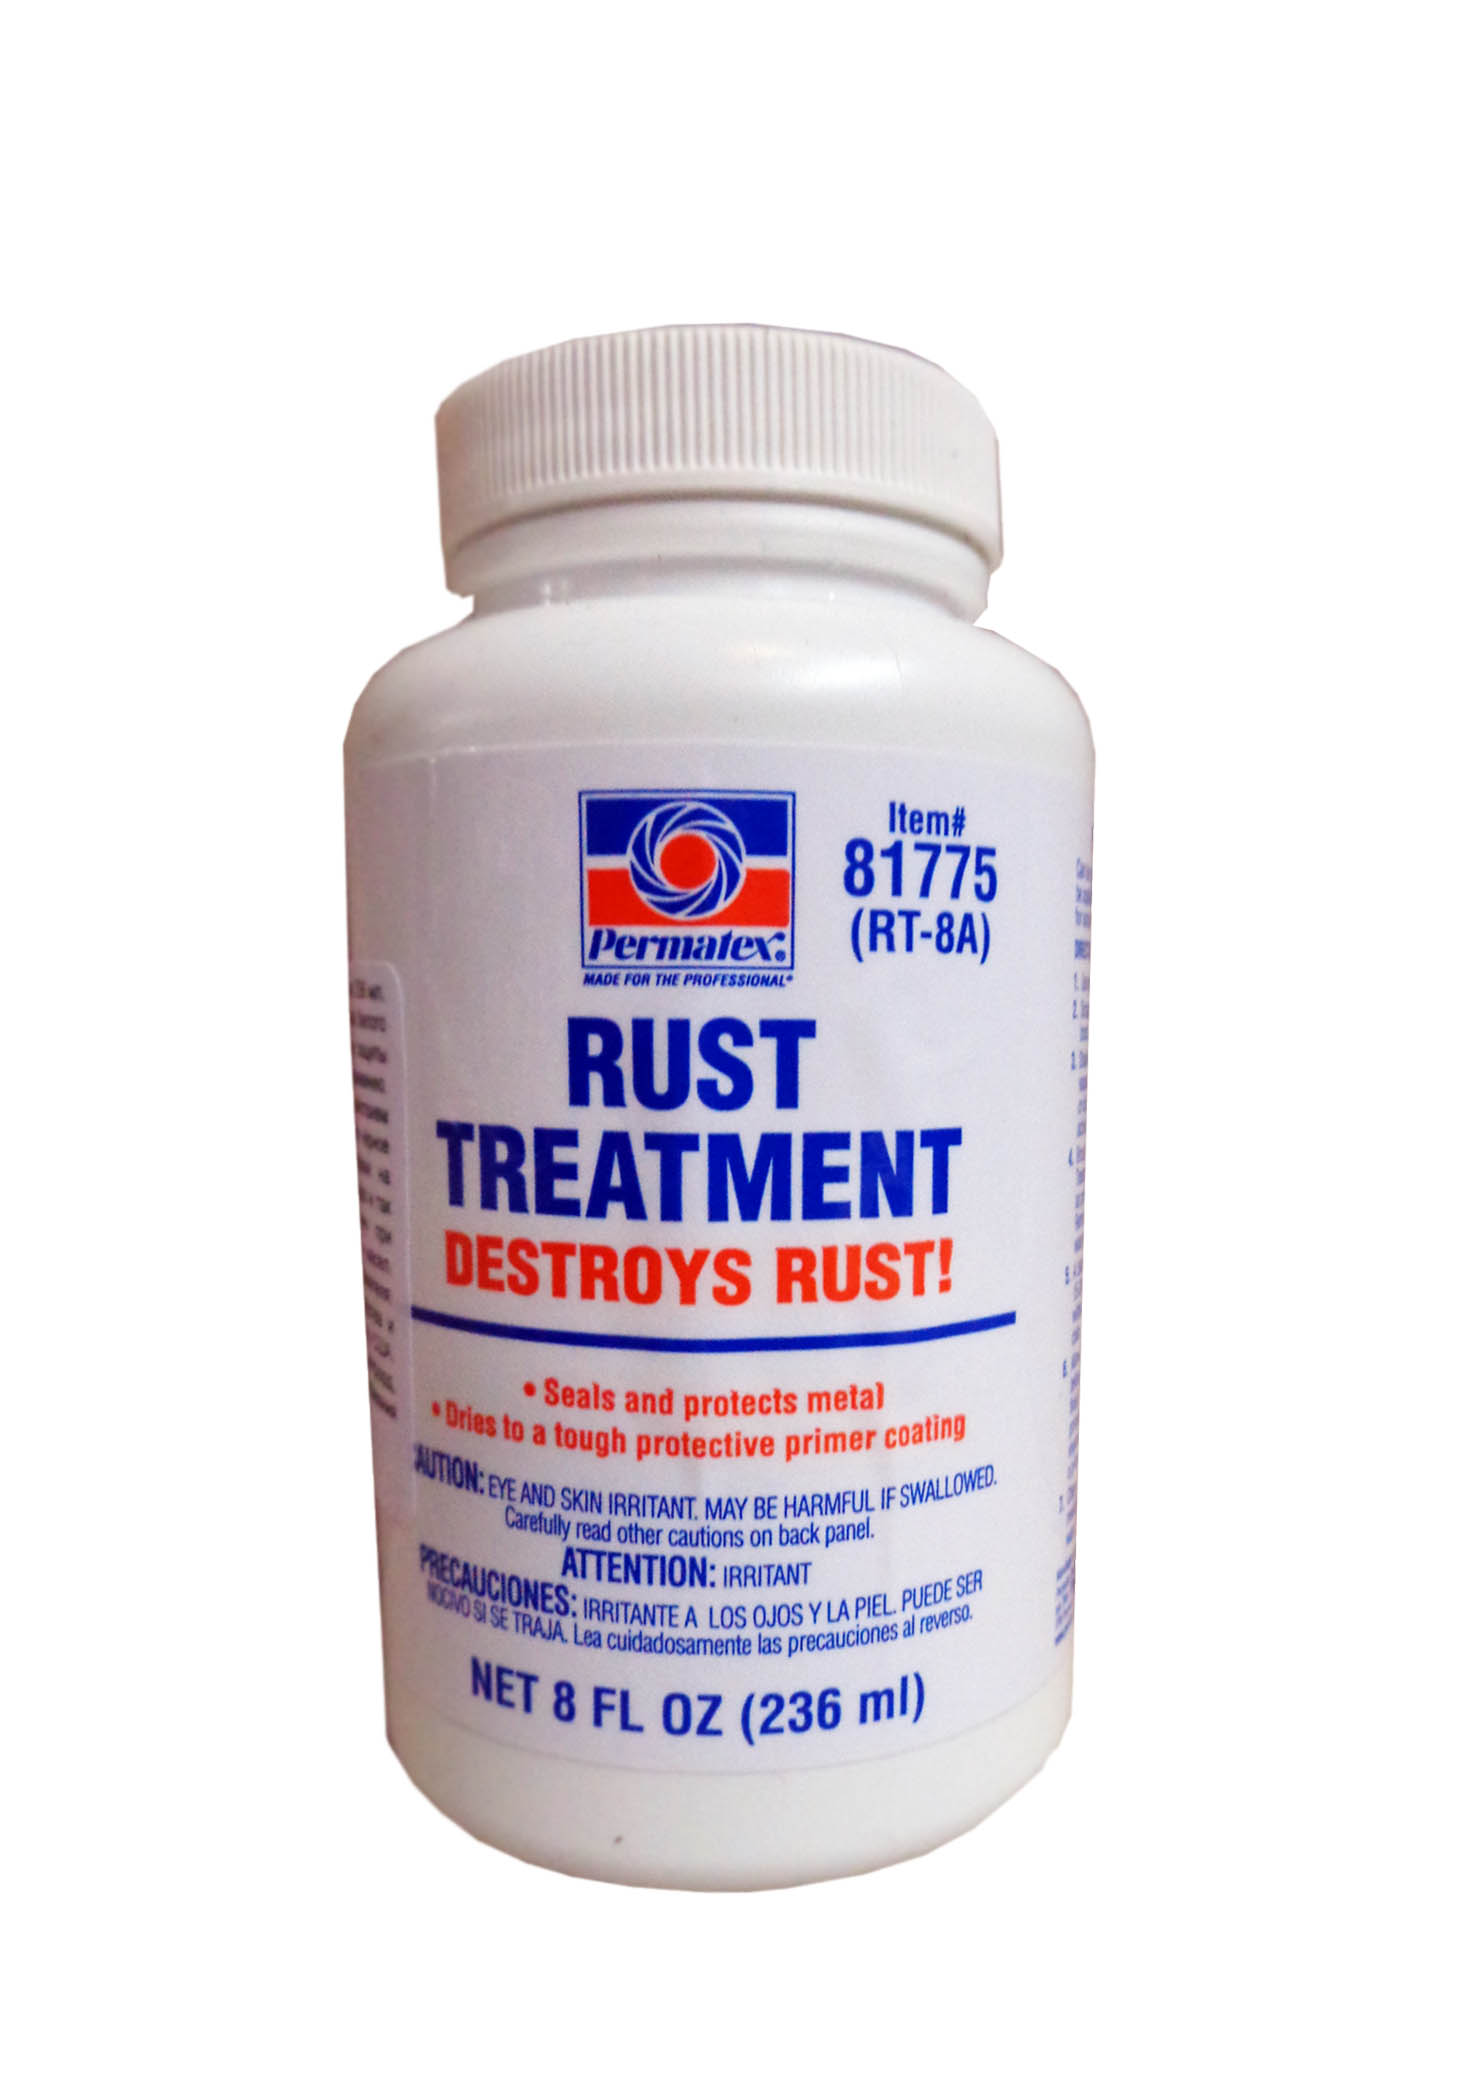 Permatex rust treatment 81775 (120) фото